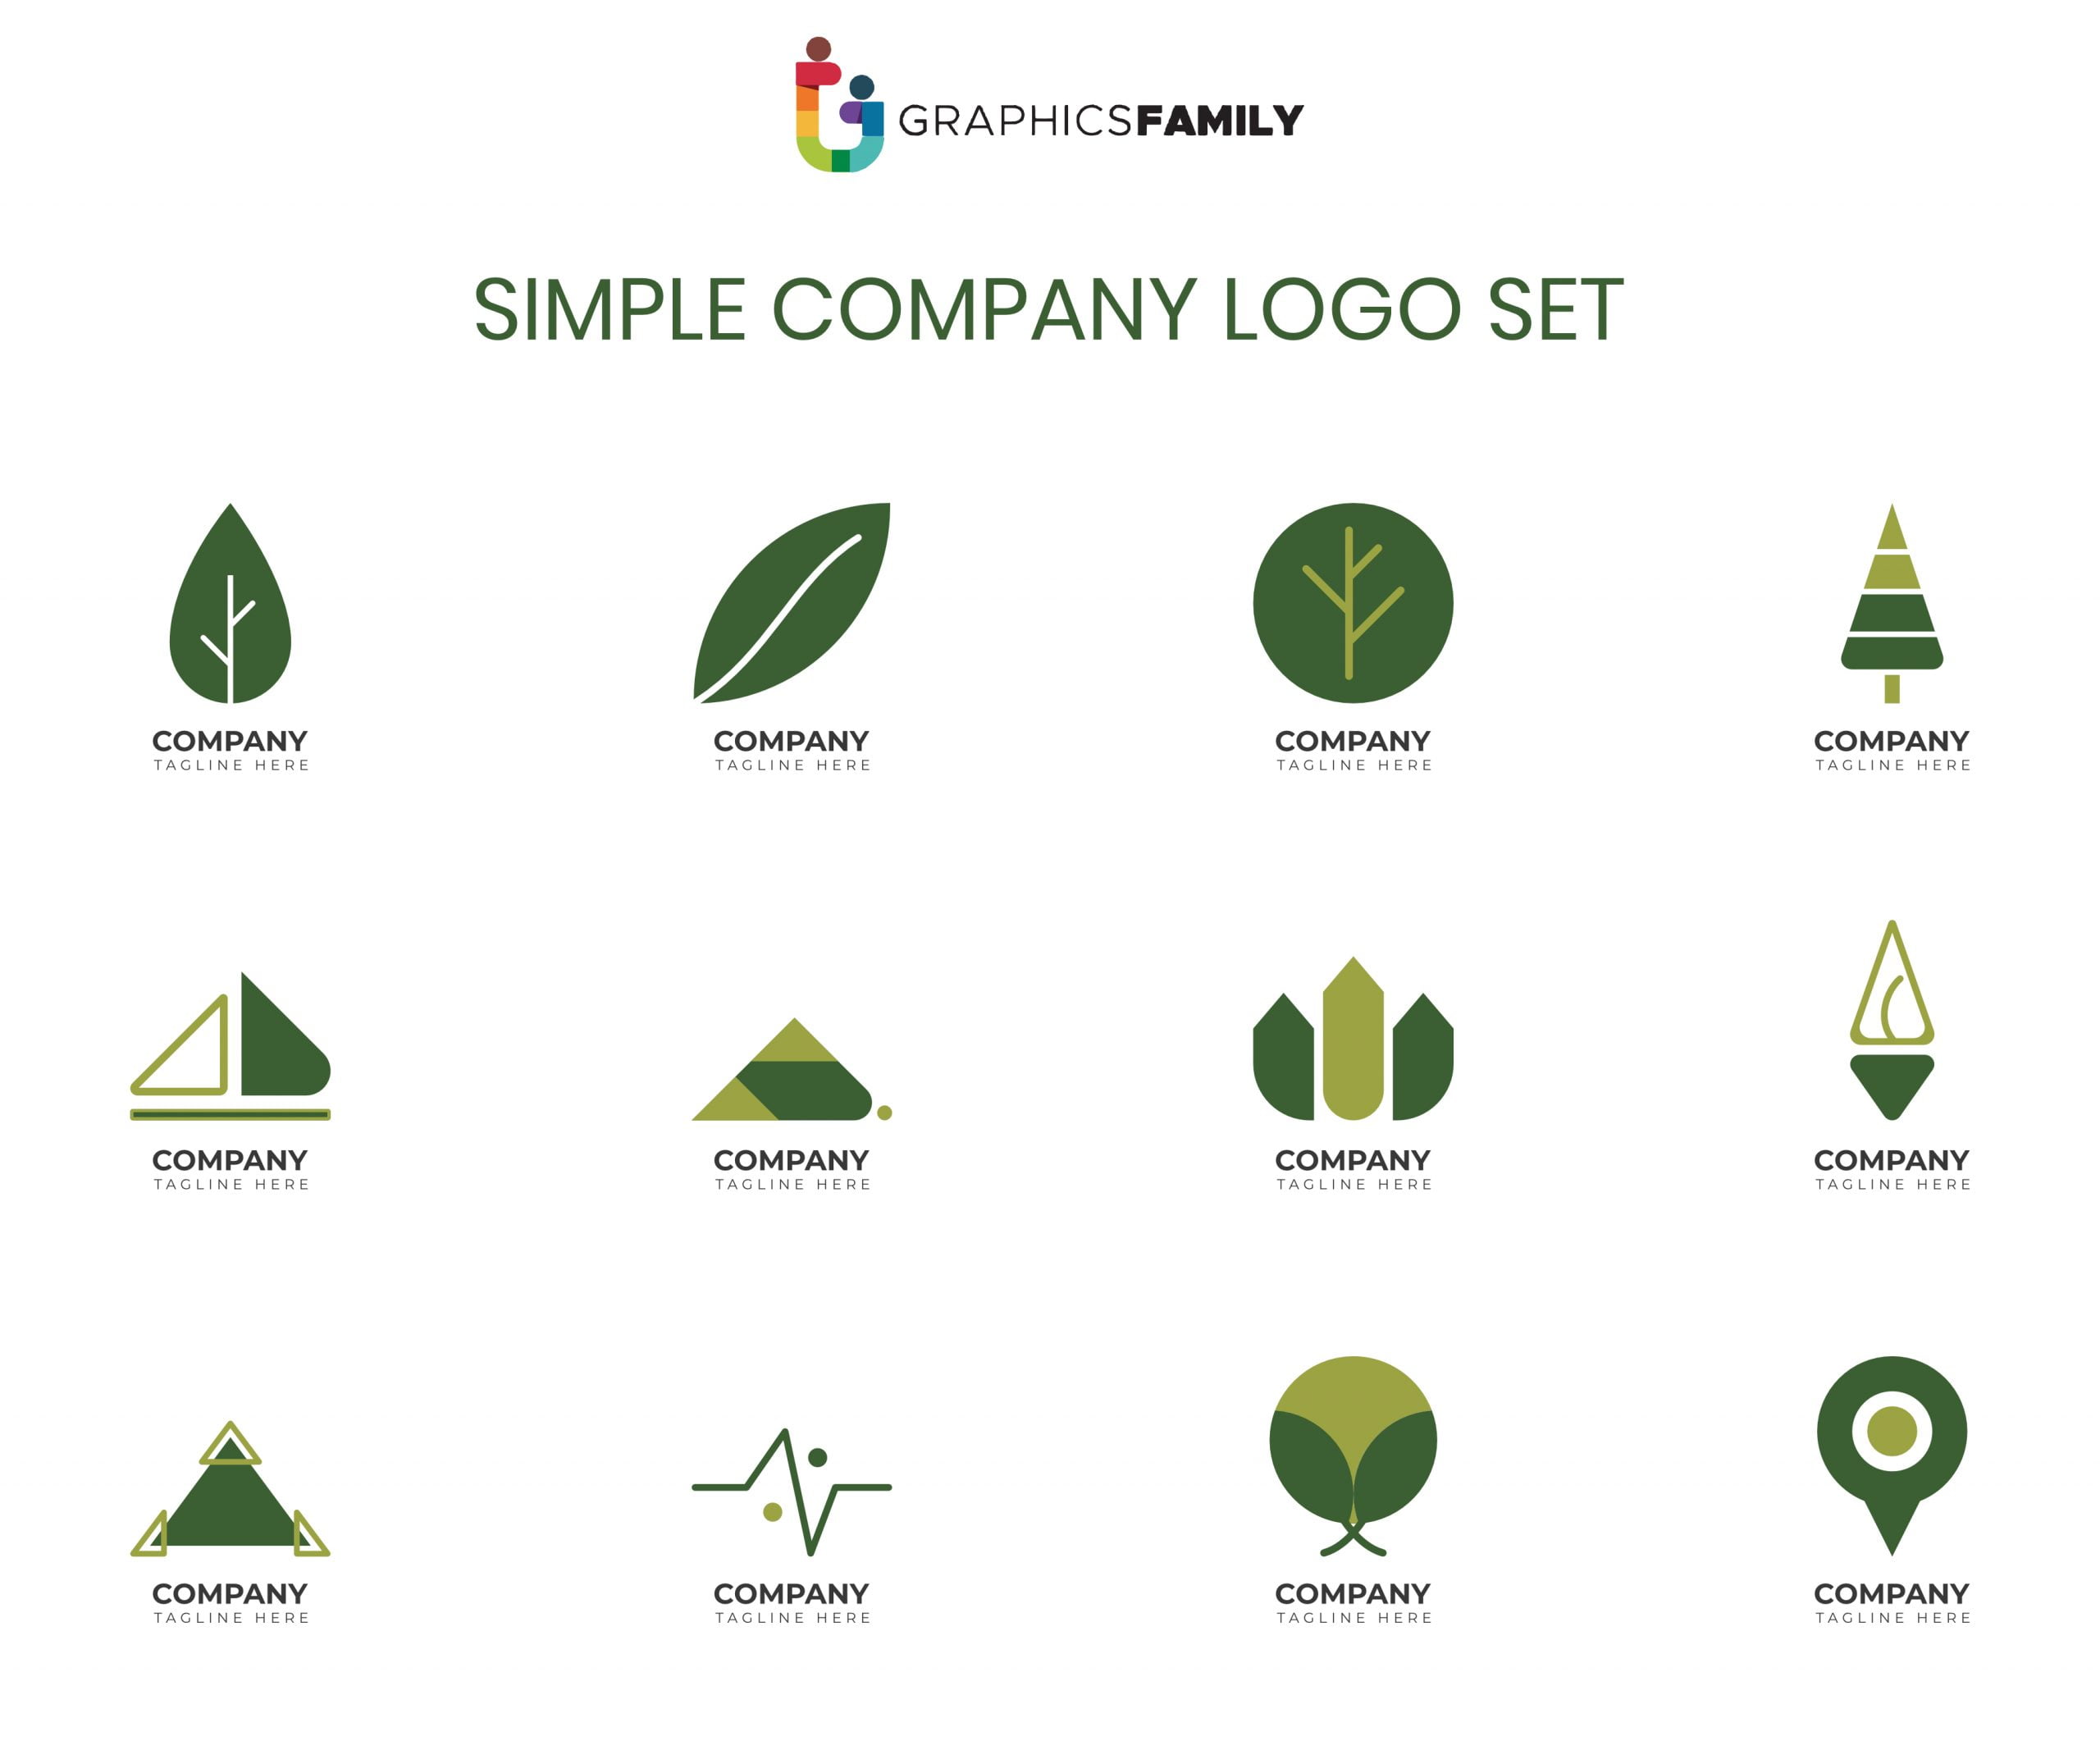 Simple Company Logos